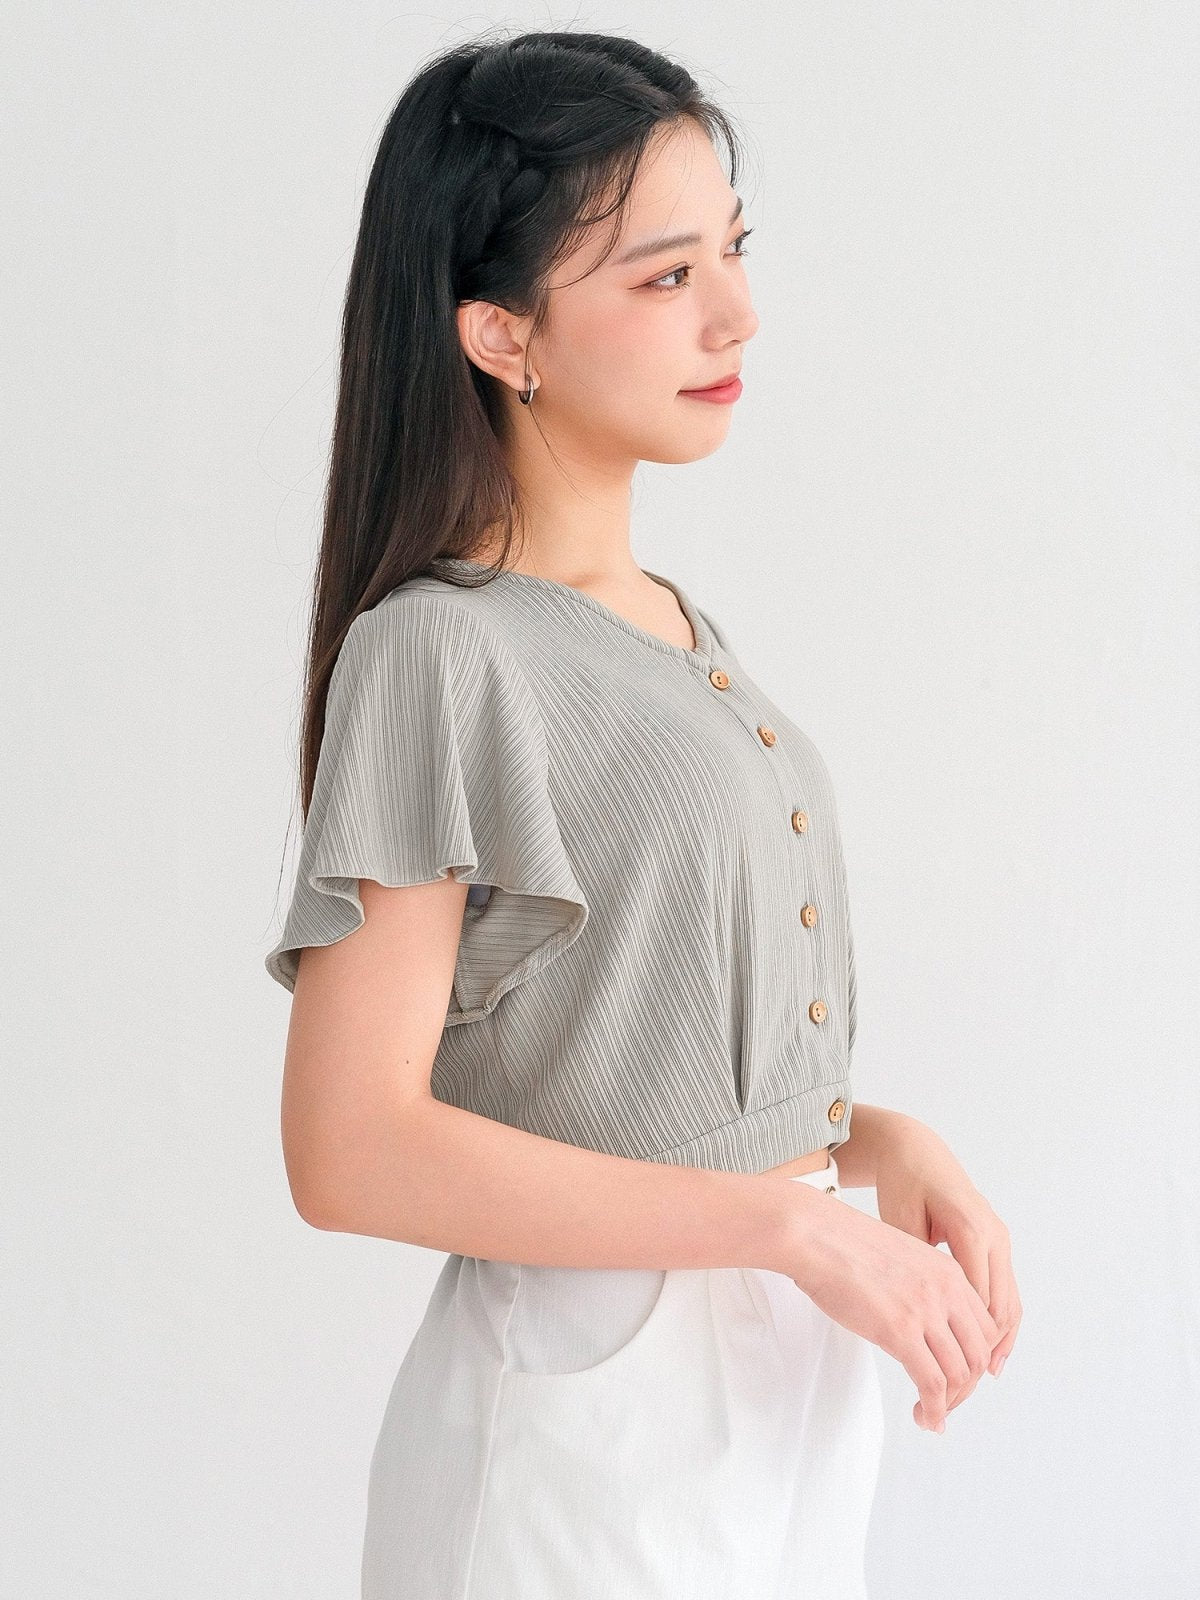 Rihu Ruffle Sleeve Crop Top - DAG-DD0334-23SageS - Mint - S - D'ZAGE Designs